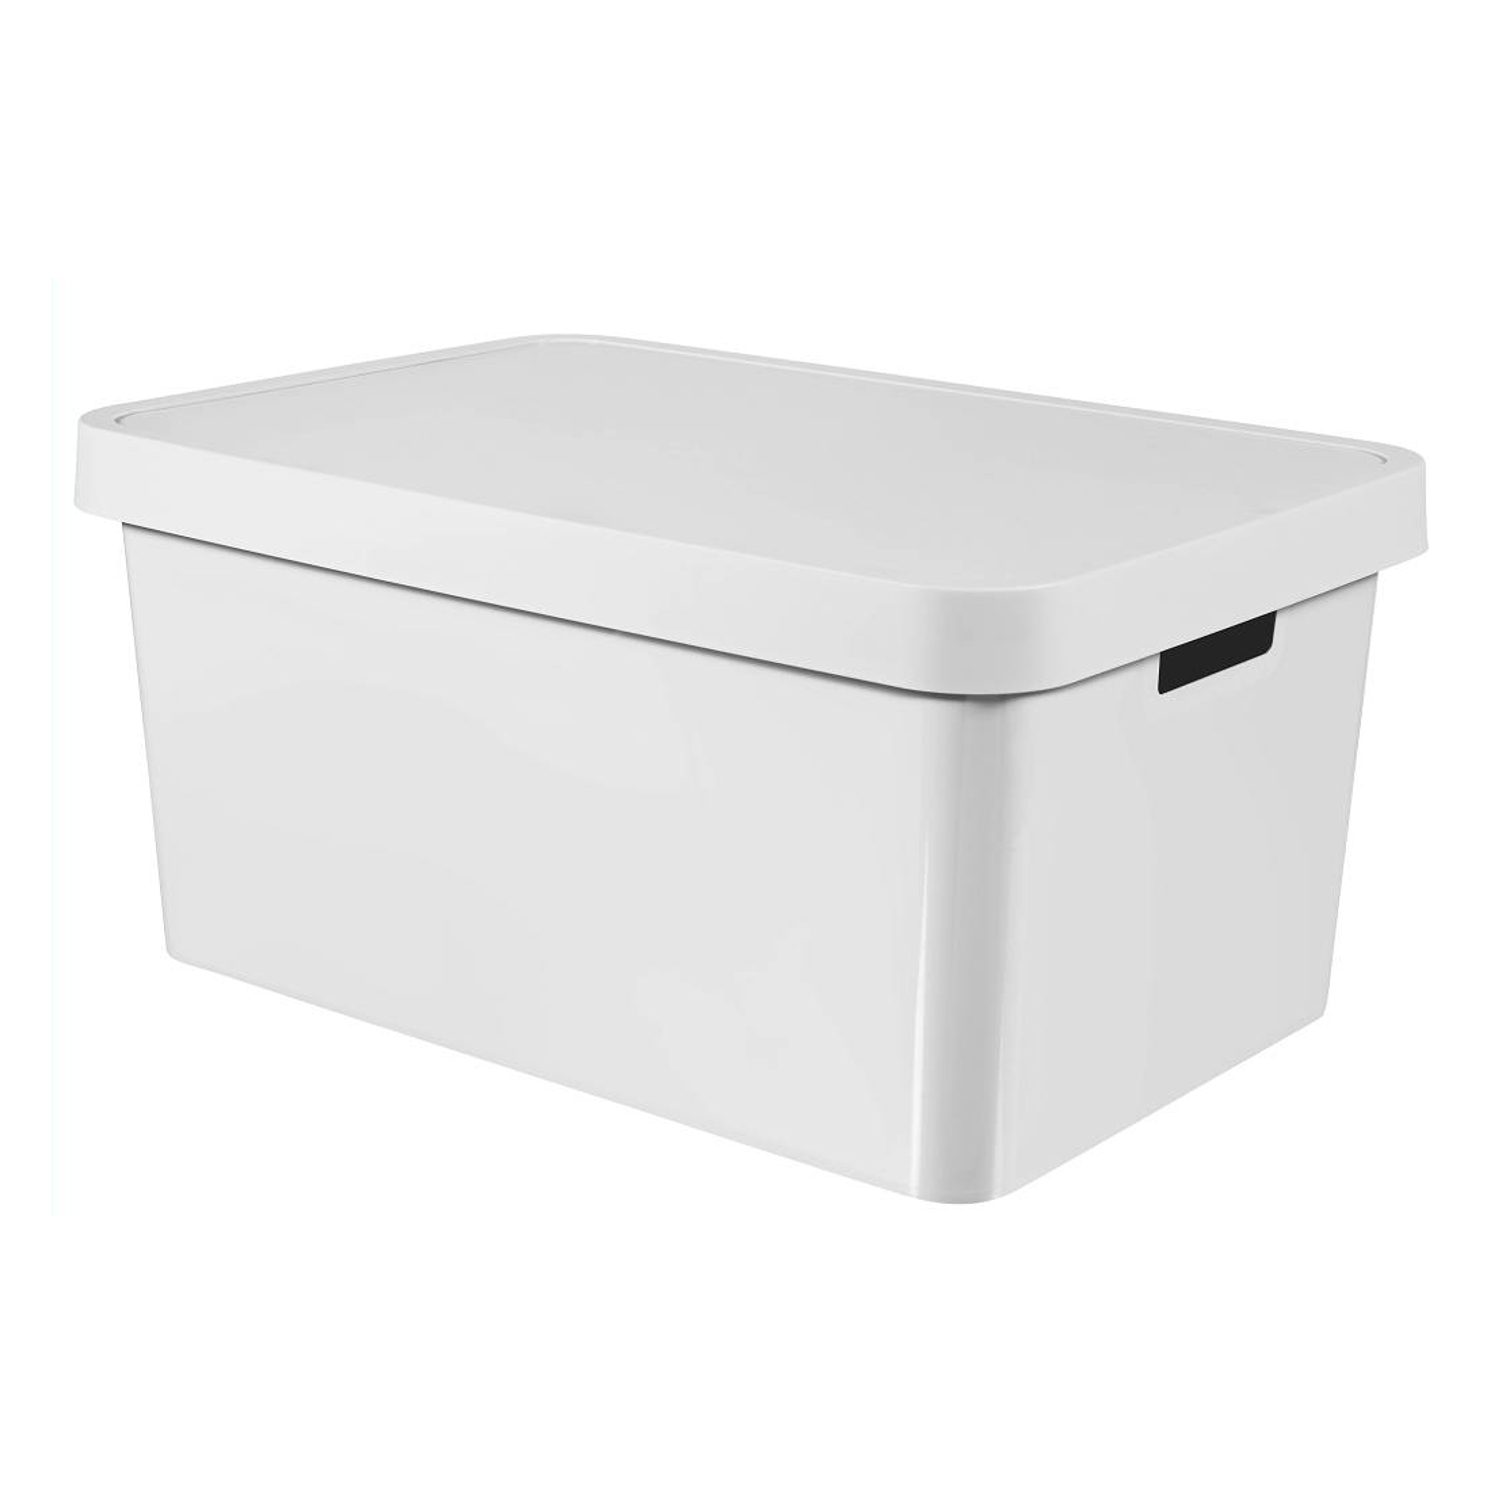 2 x Robusto-Box mit Deckel 45 L grau Aufbewahrungsbox Box Kiste 